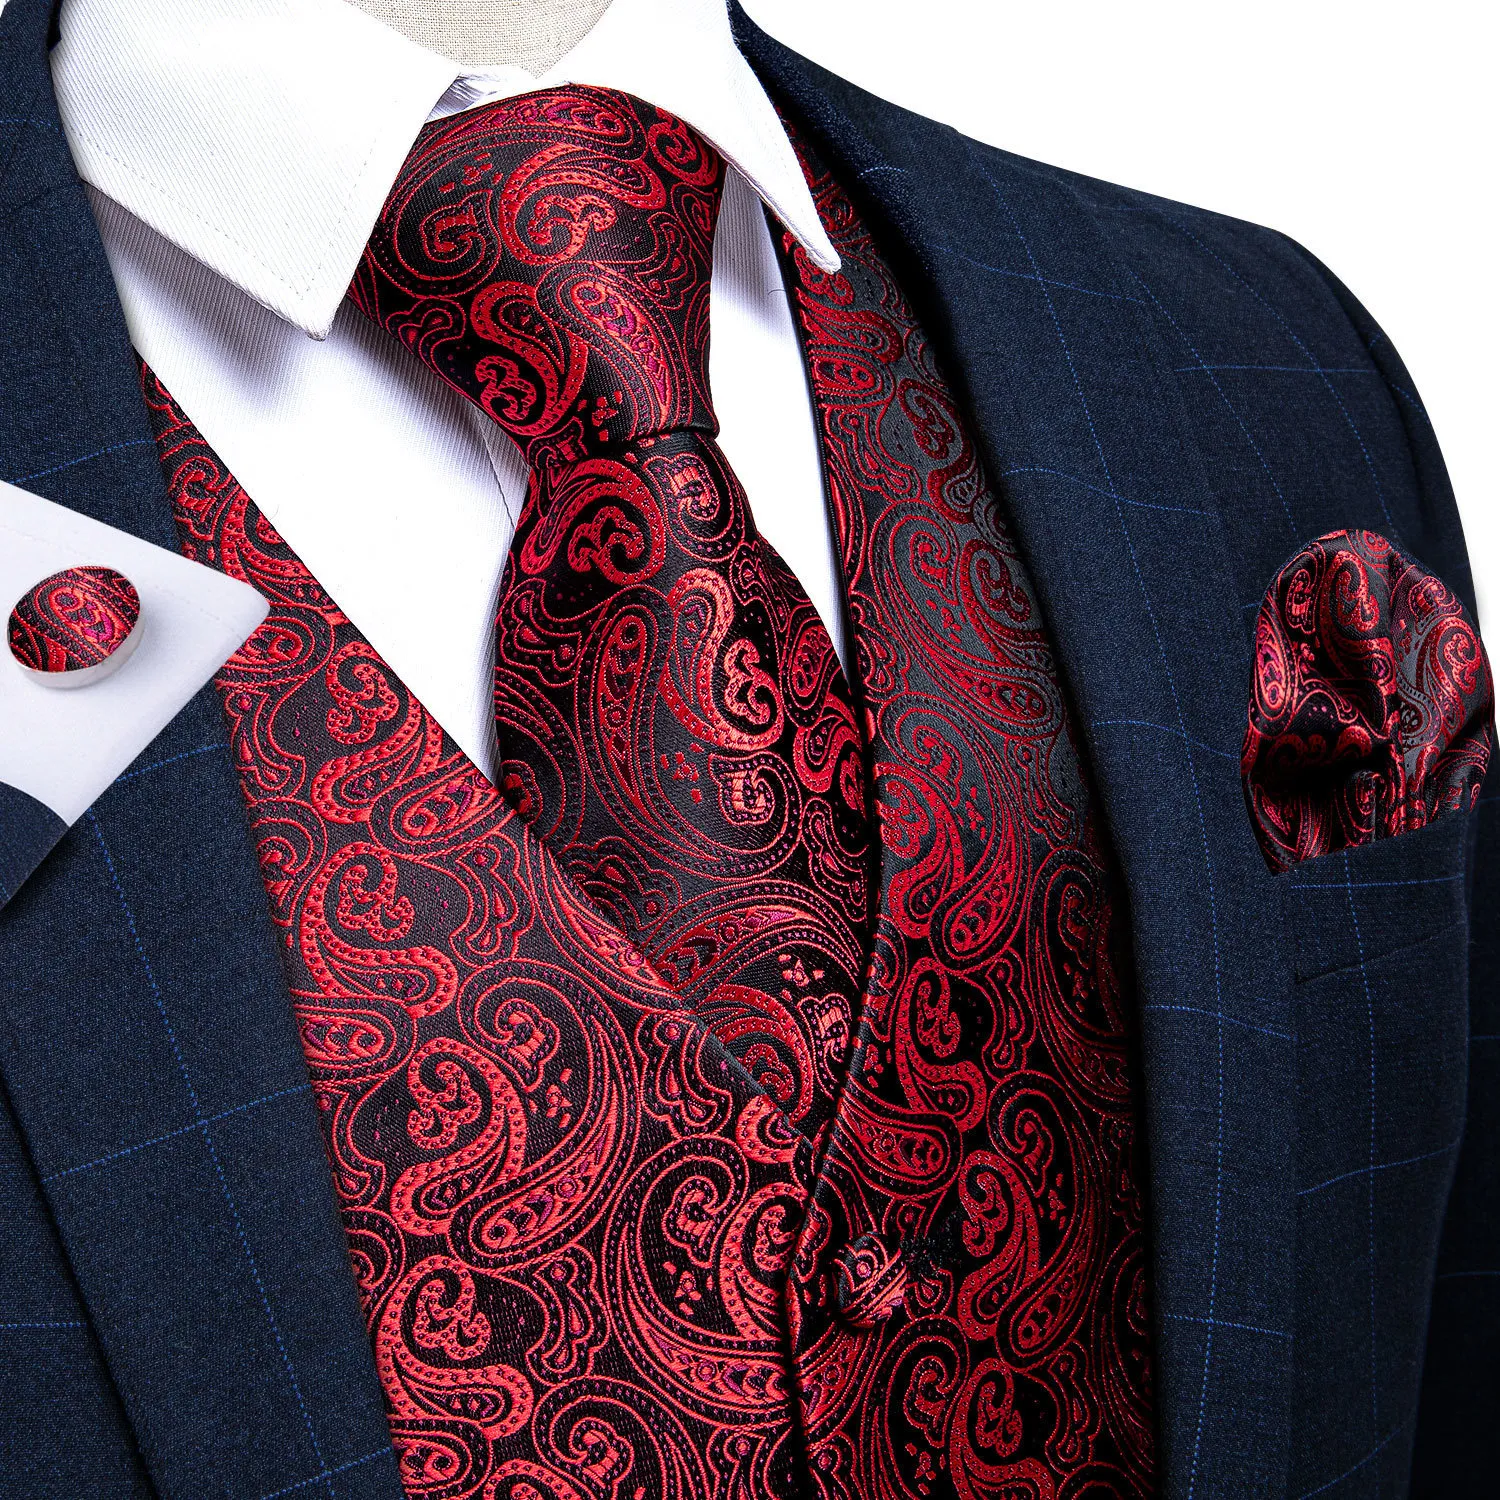 Men's Vests Luxury Red Paisley 100 Silk Fashion Dress Vest Neck Tie Set Wedding Party Sleeveless Formal Business Jacket DiBanGu 230222